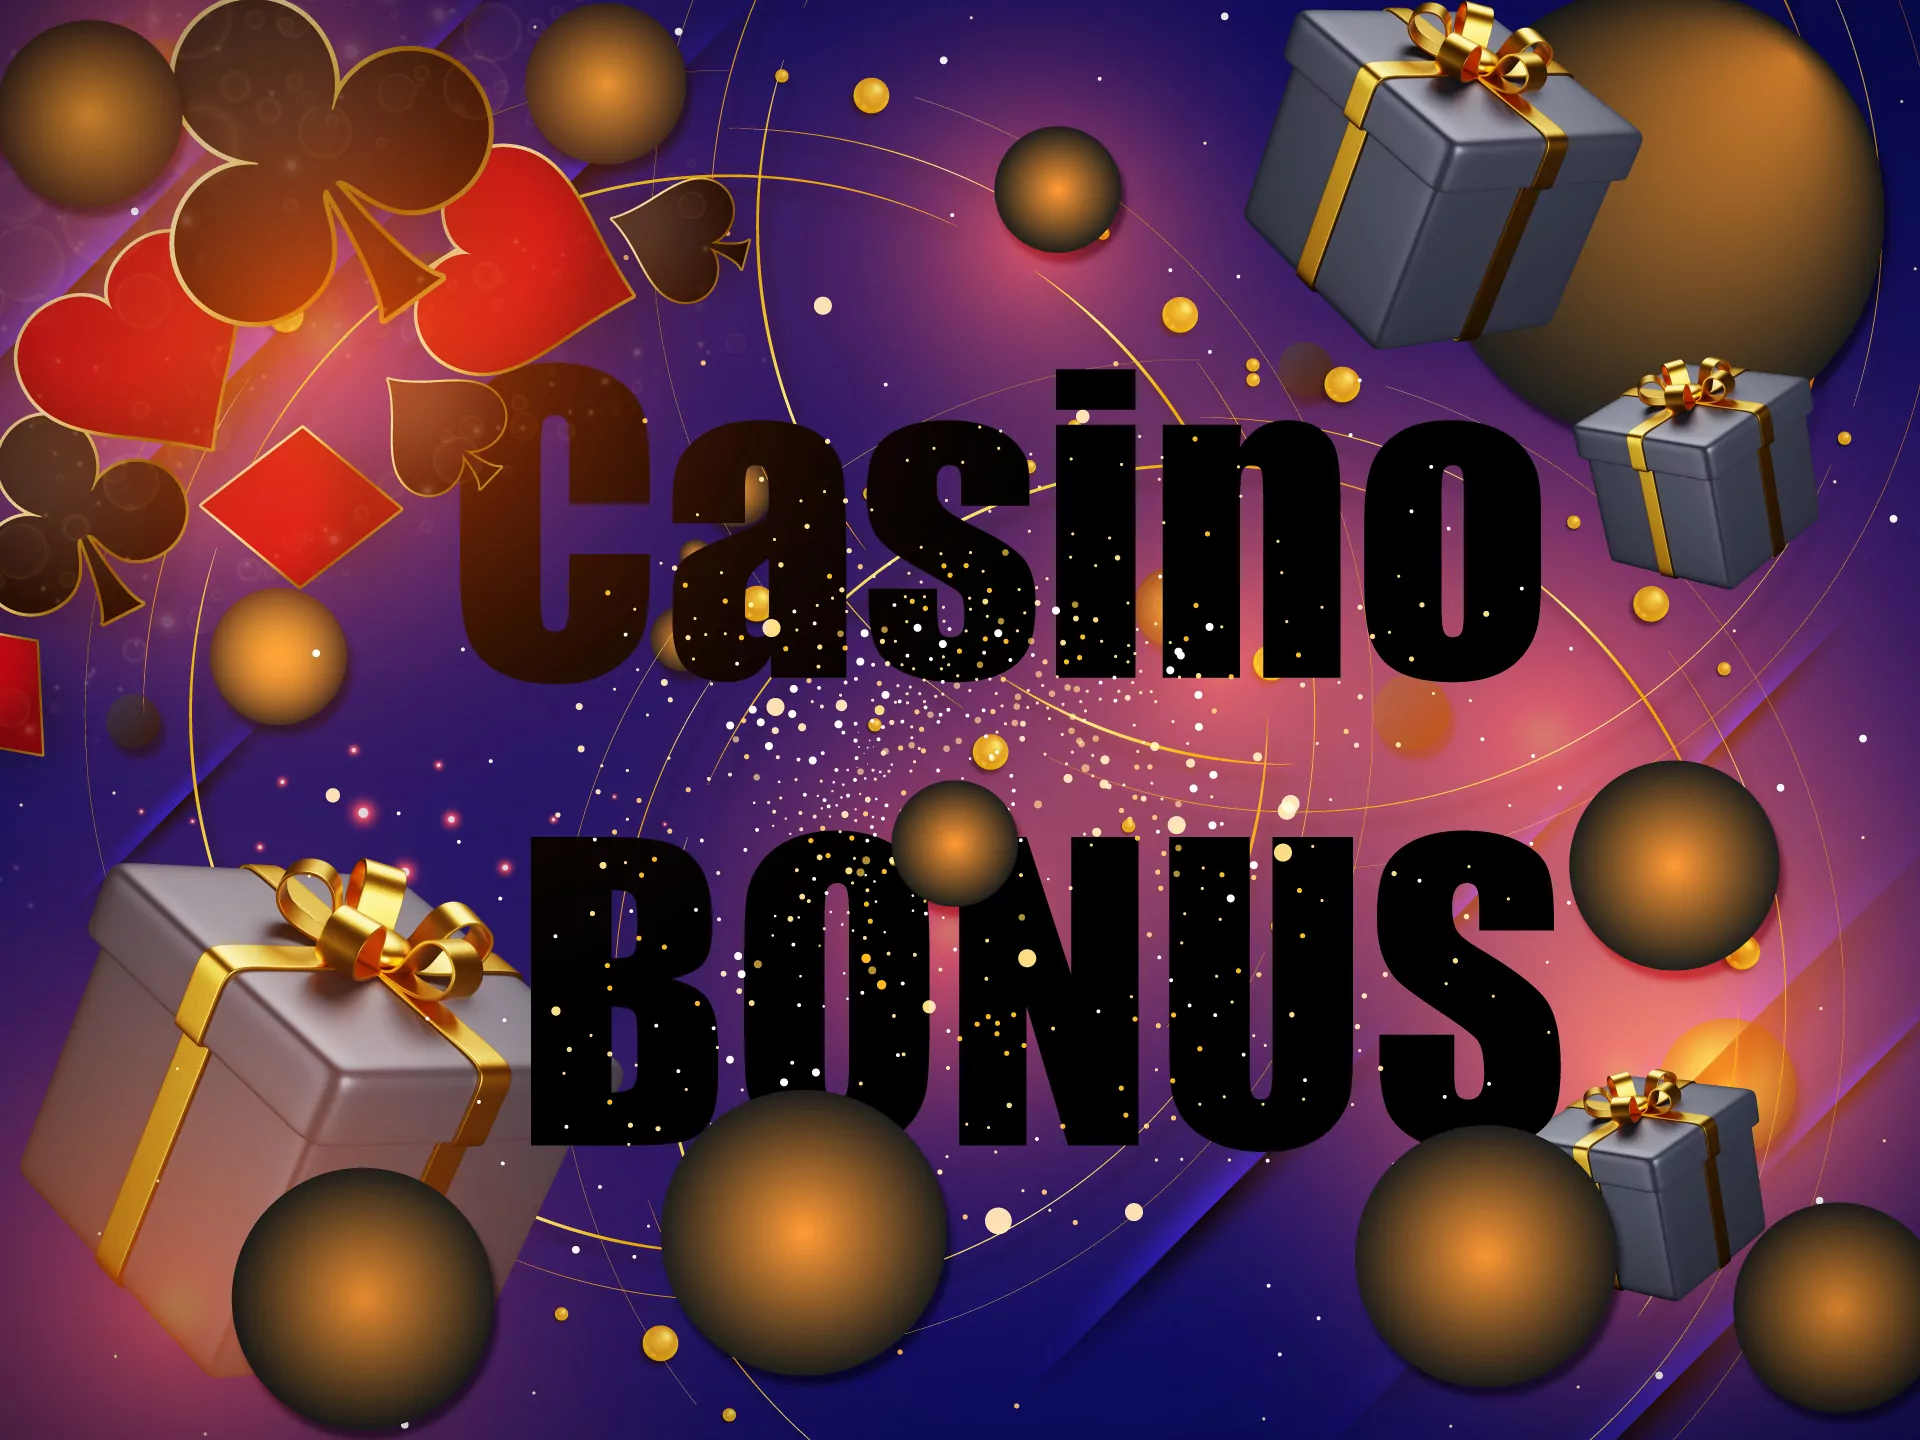 Receive a casino welcome bonus and spend it in the ICCWIN casino.